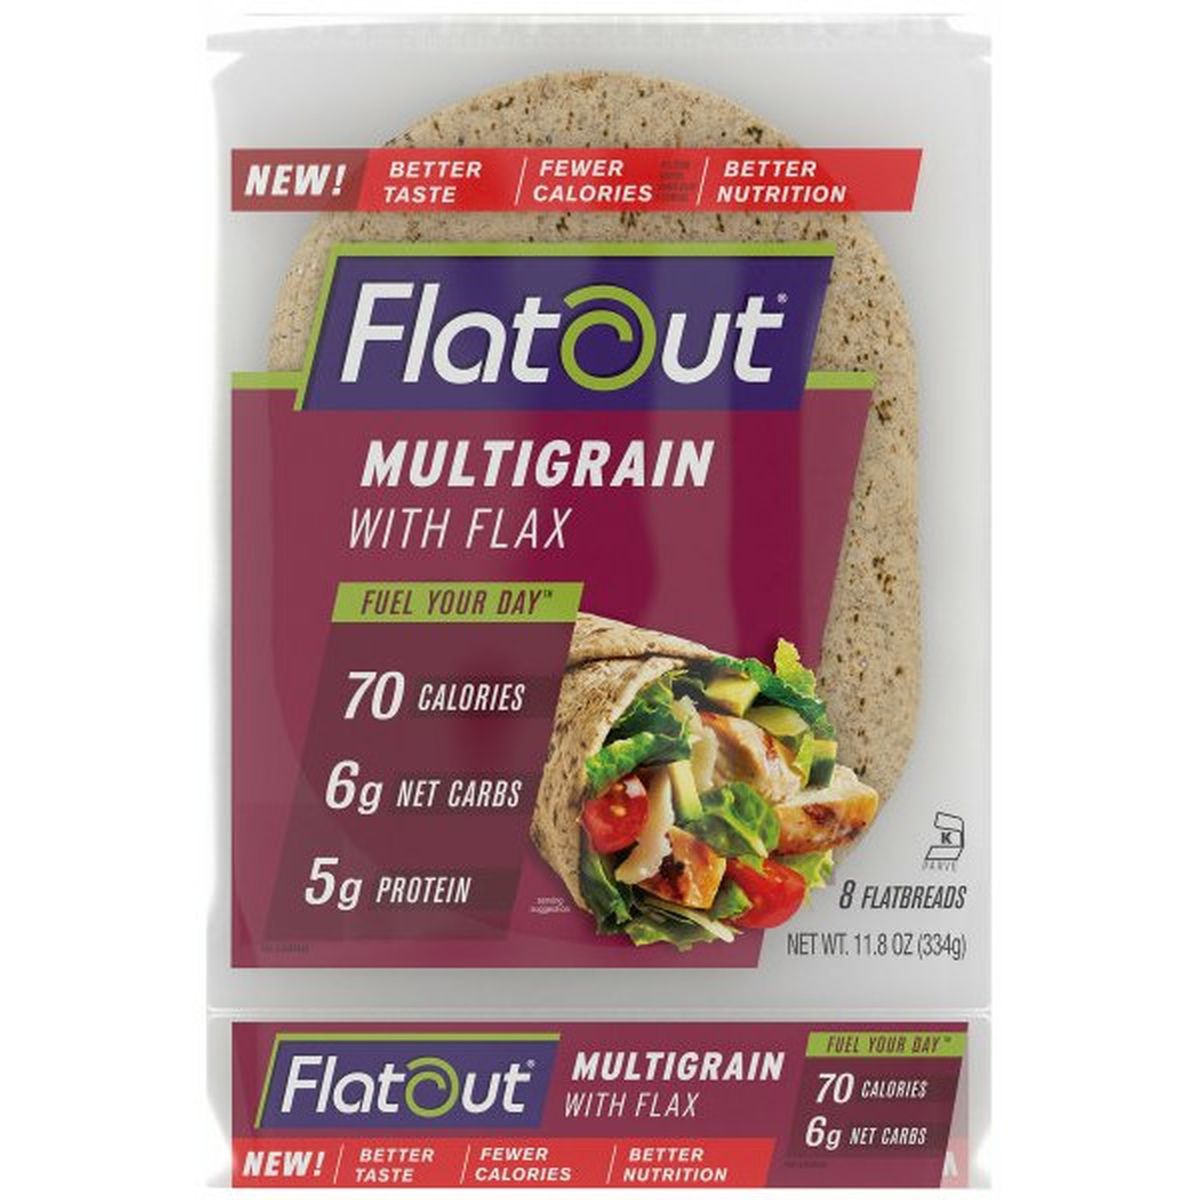 Calories in Flatout Multigrain with Flax Flatbread